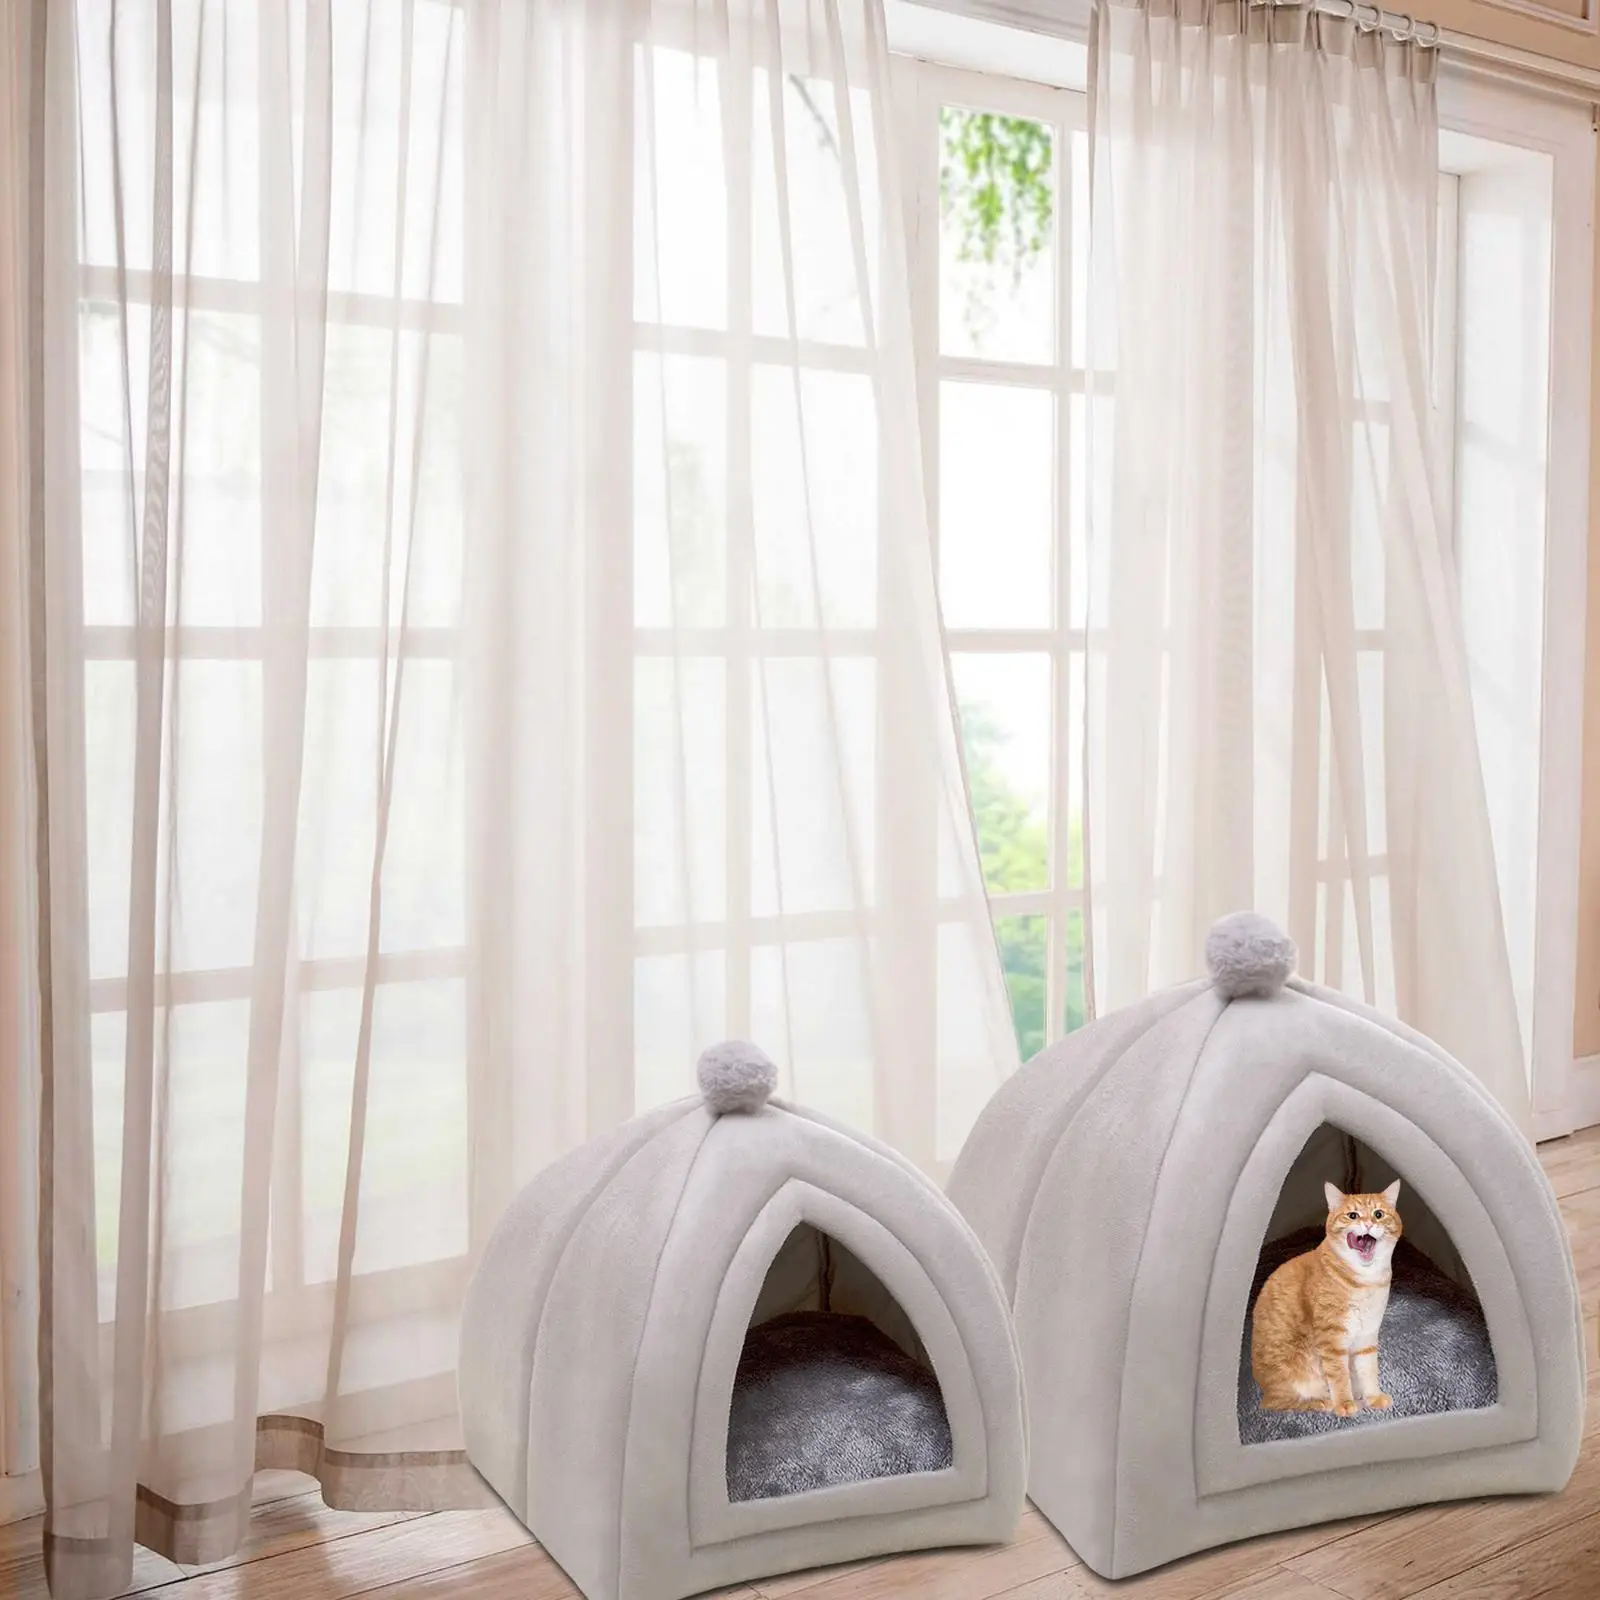 Cute Cat house Cushion Plush warm Kennel Nest Washable for winter Floor Medium Sized Dog Puppy